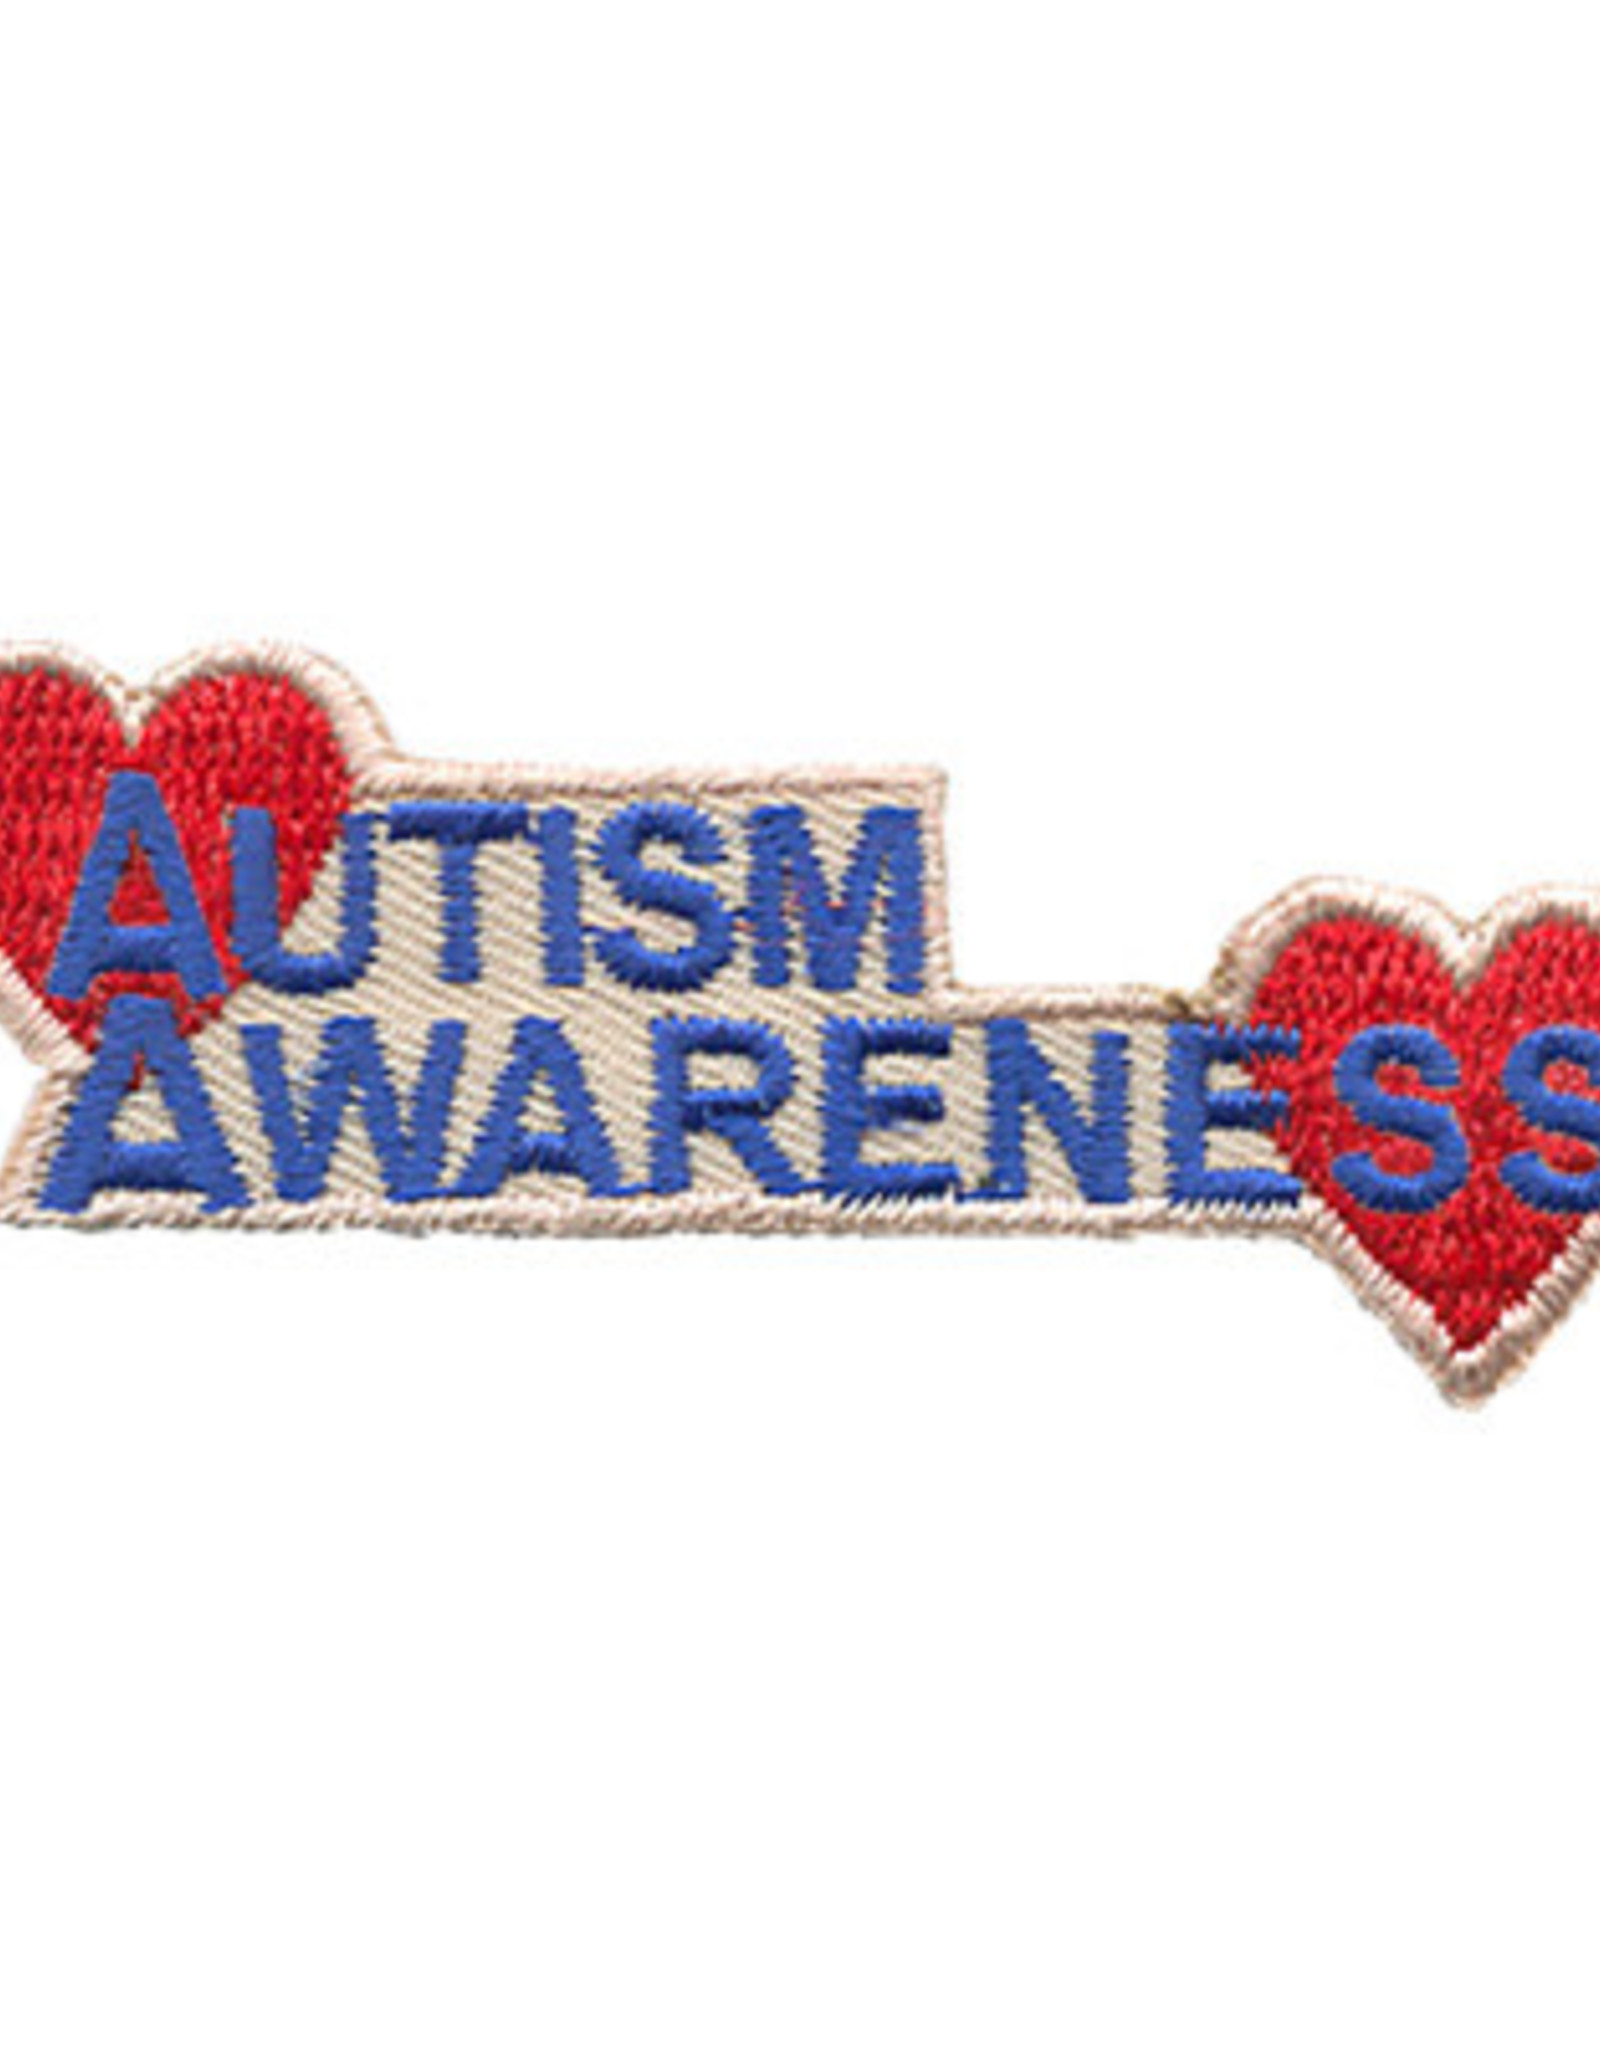 Advantage Emblem & Screen Prnt *Autism Awareness Hearts Fun Patch